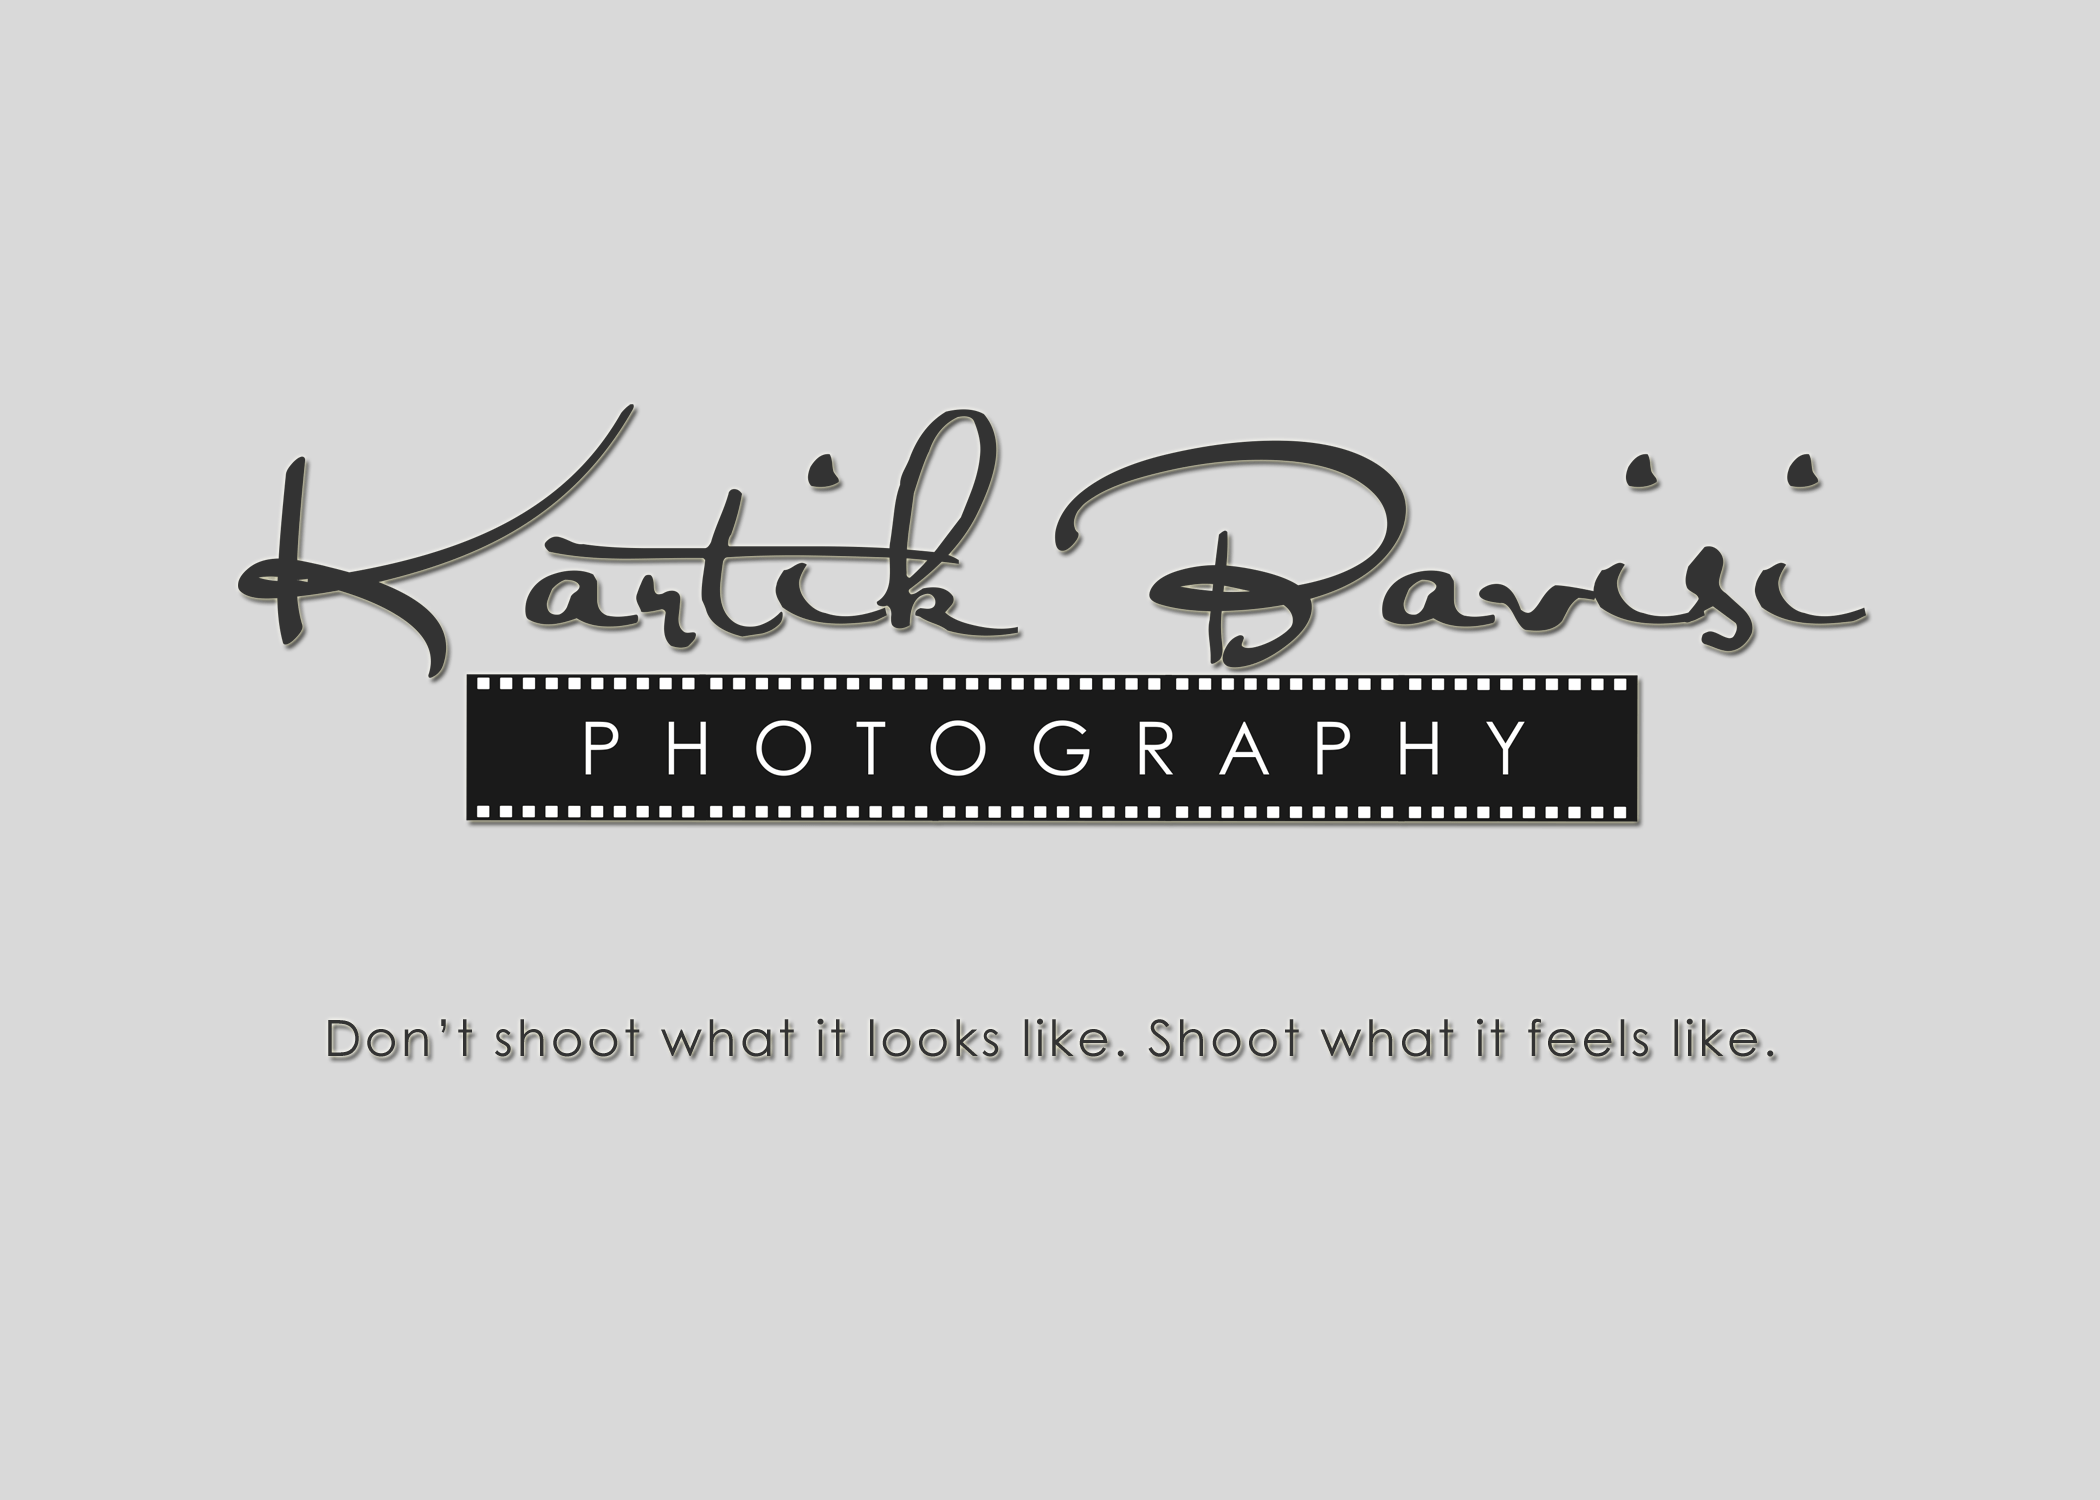 Great Photography Logo - Kartik Bavisi Photography LOGO by kbkb143.deviantart.com on ...